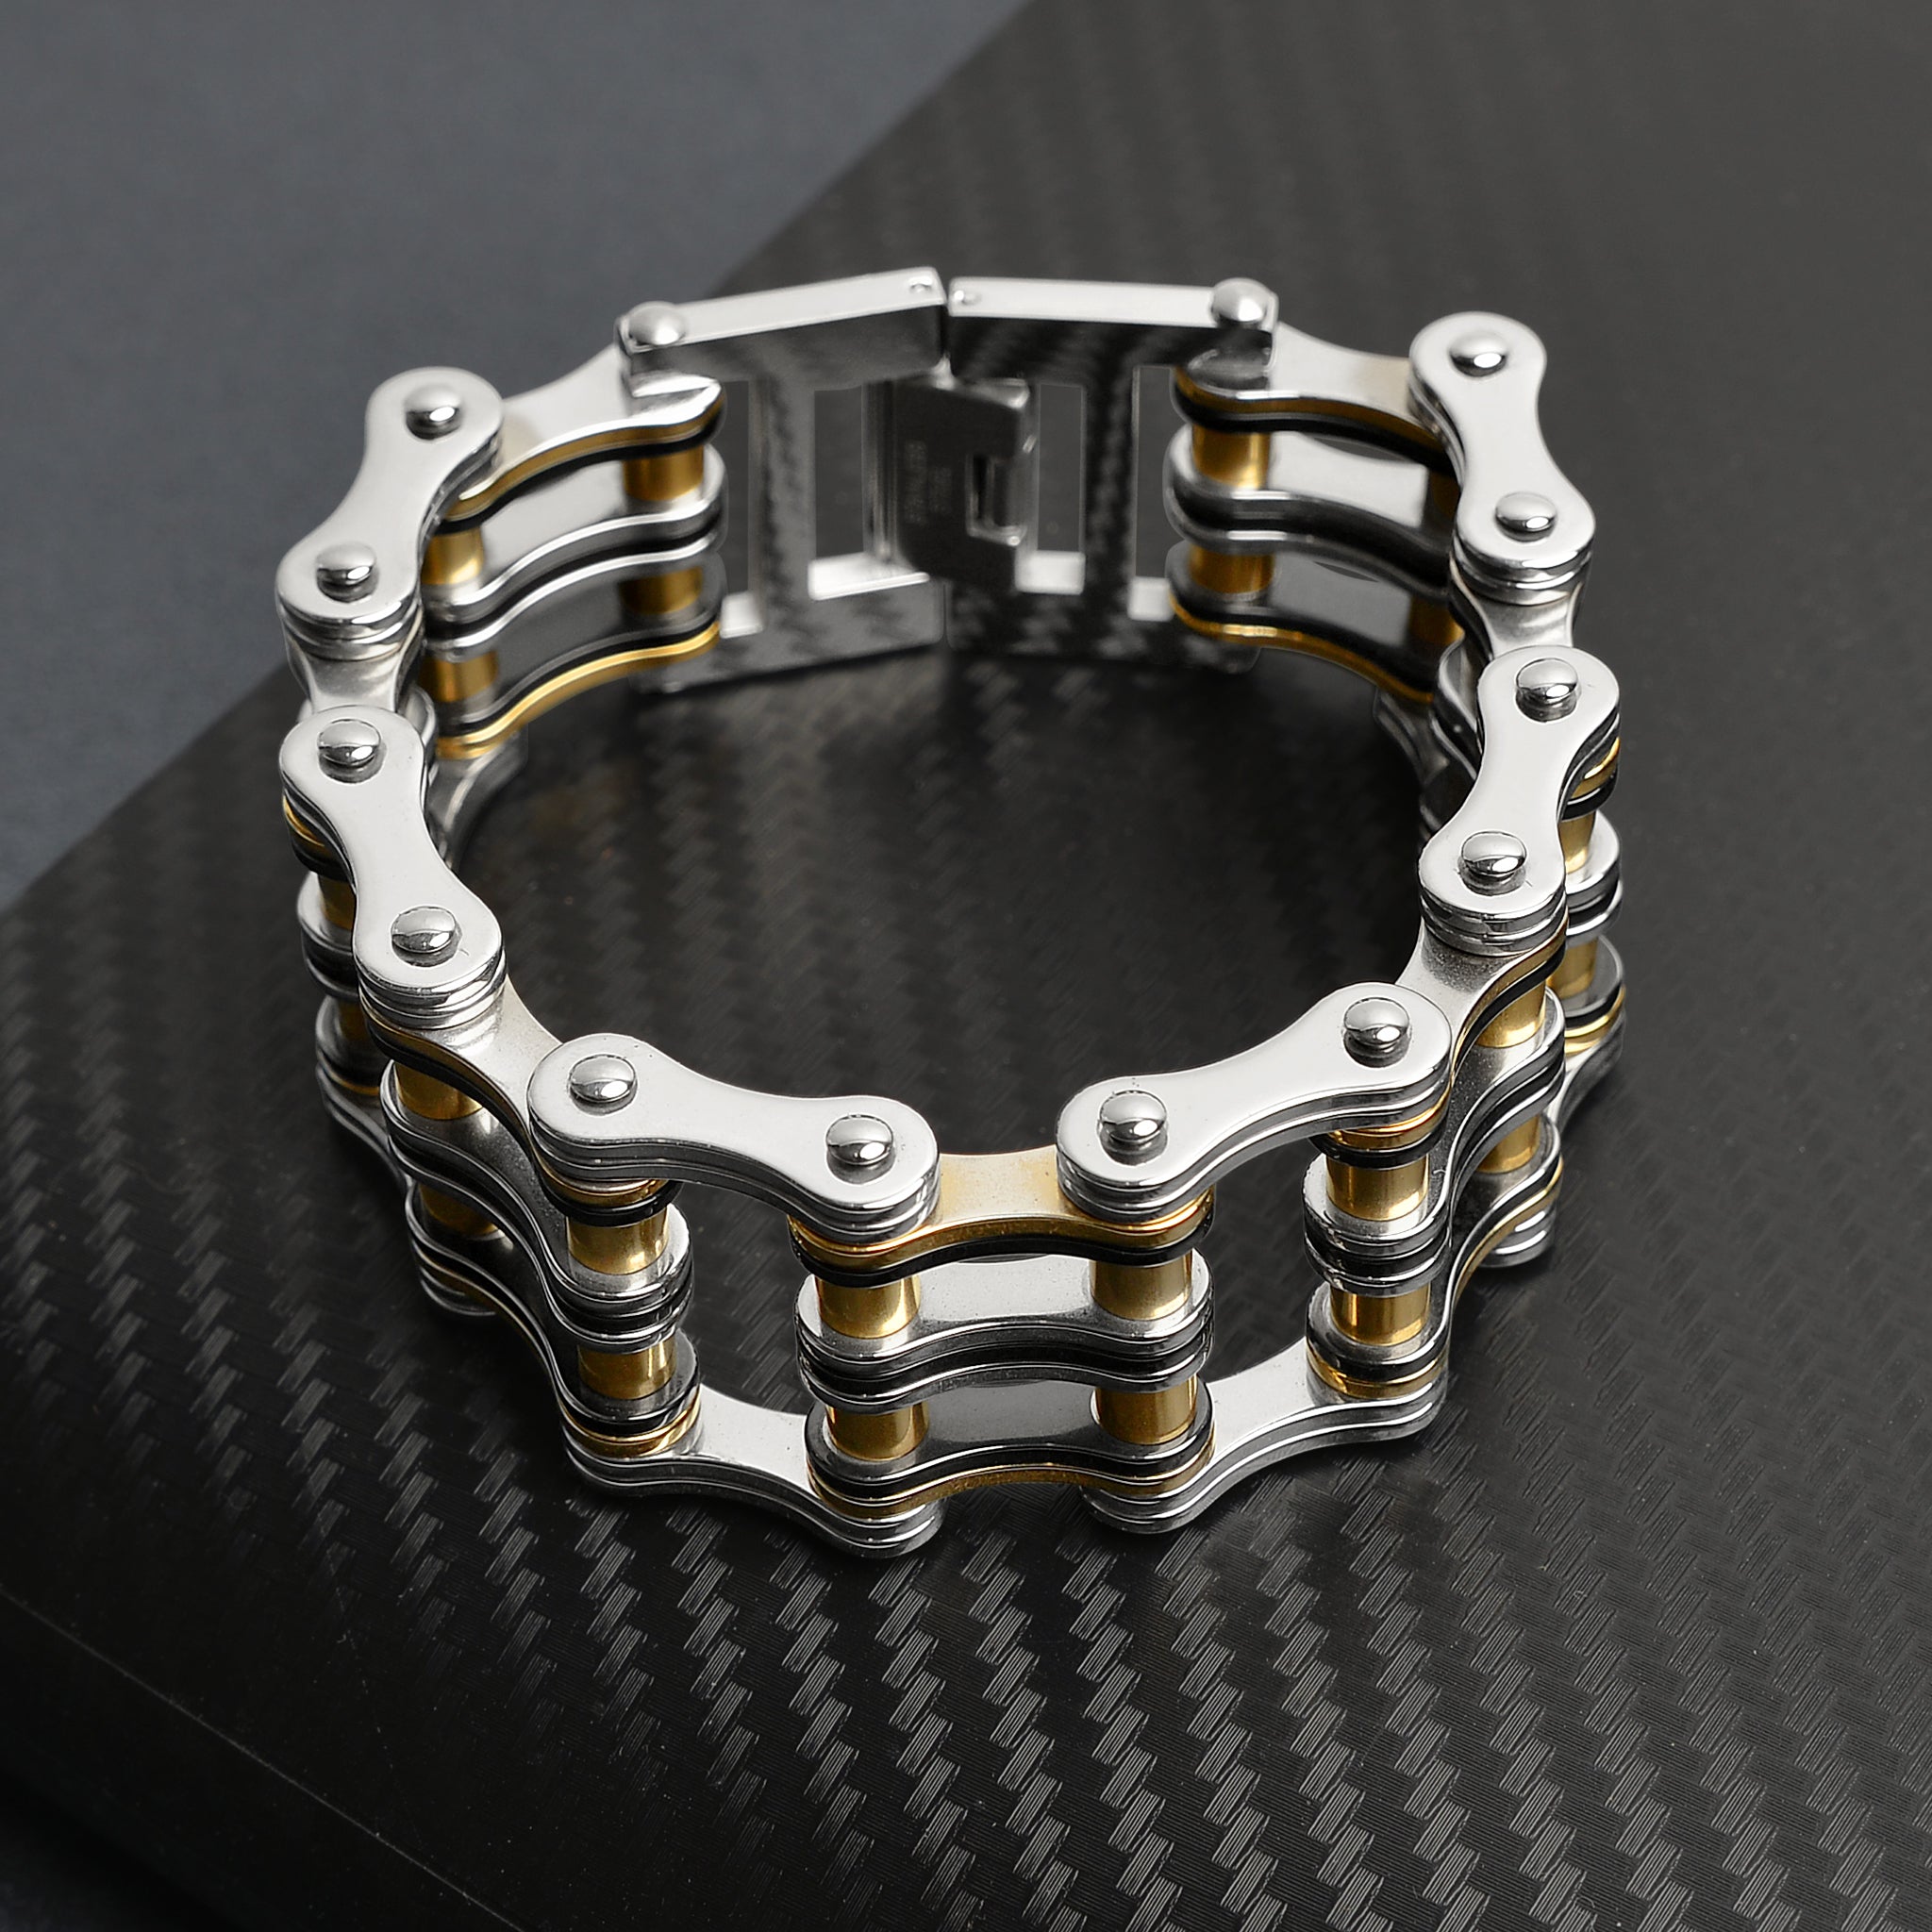 18k solid gold mens motorcycle/bike chain bracelet 8.5